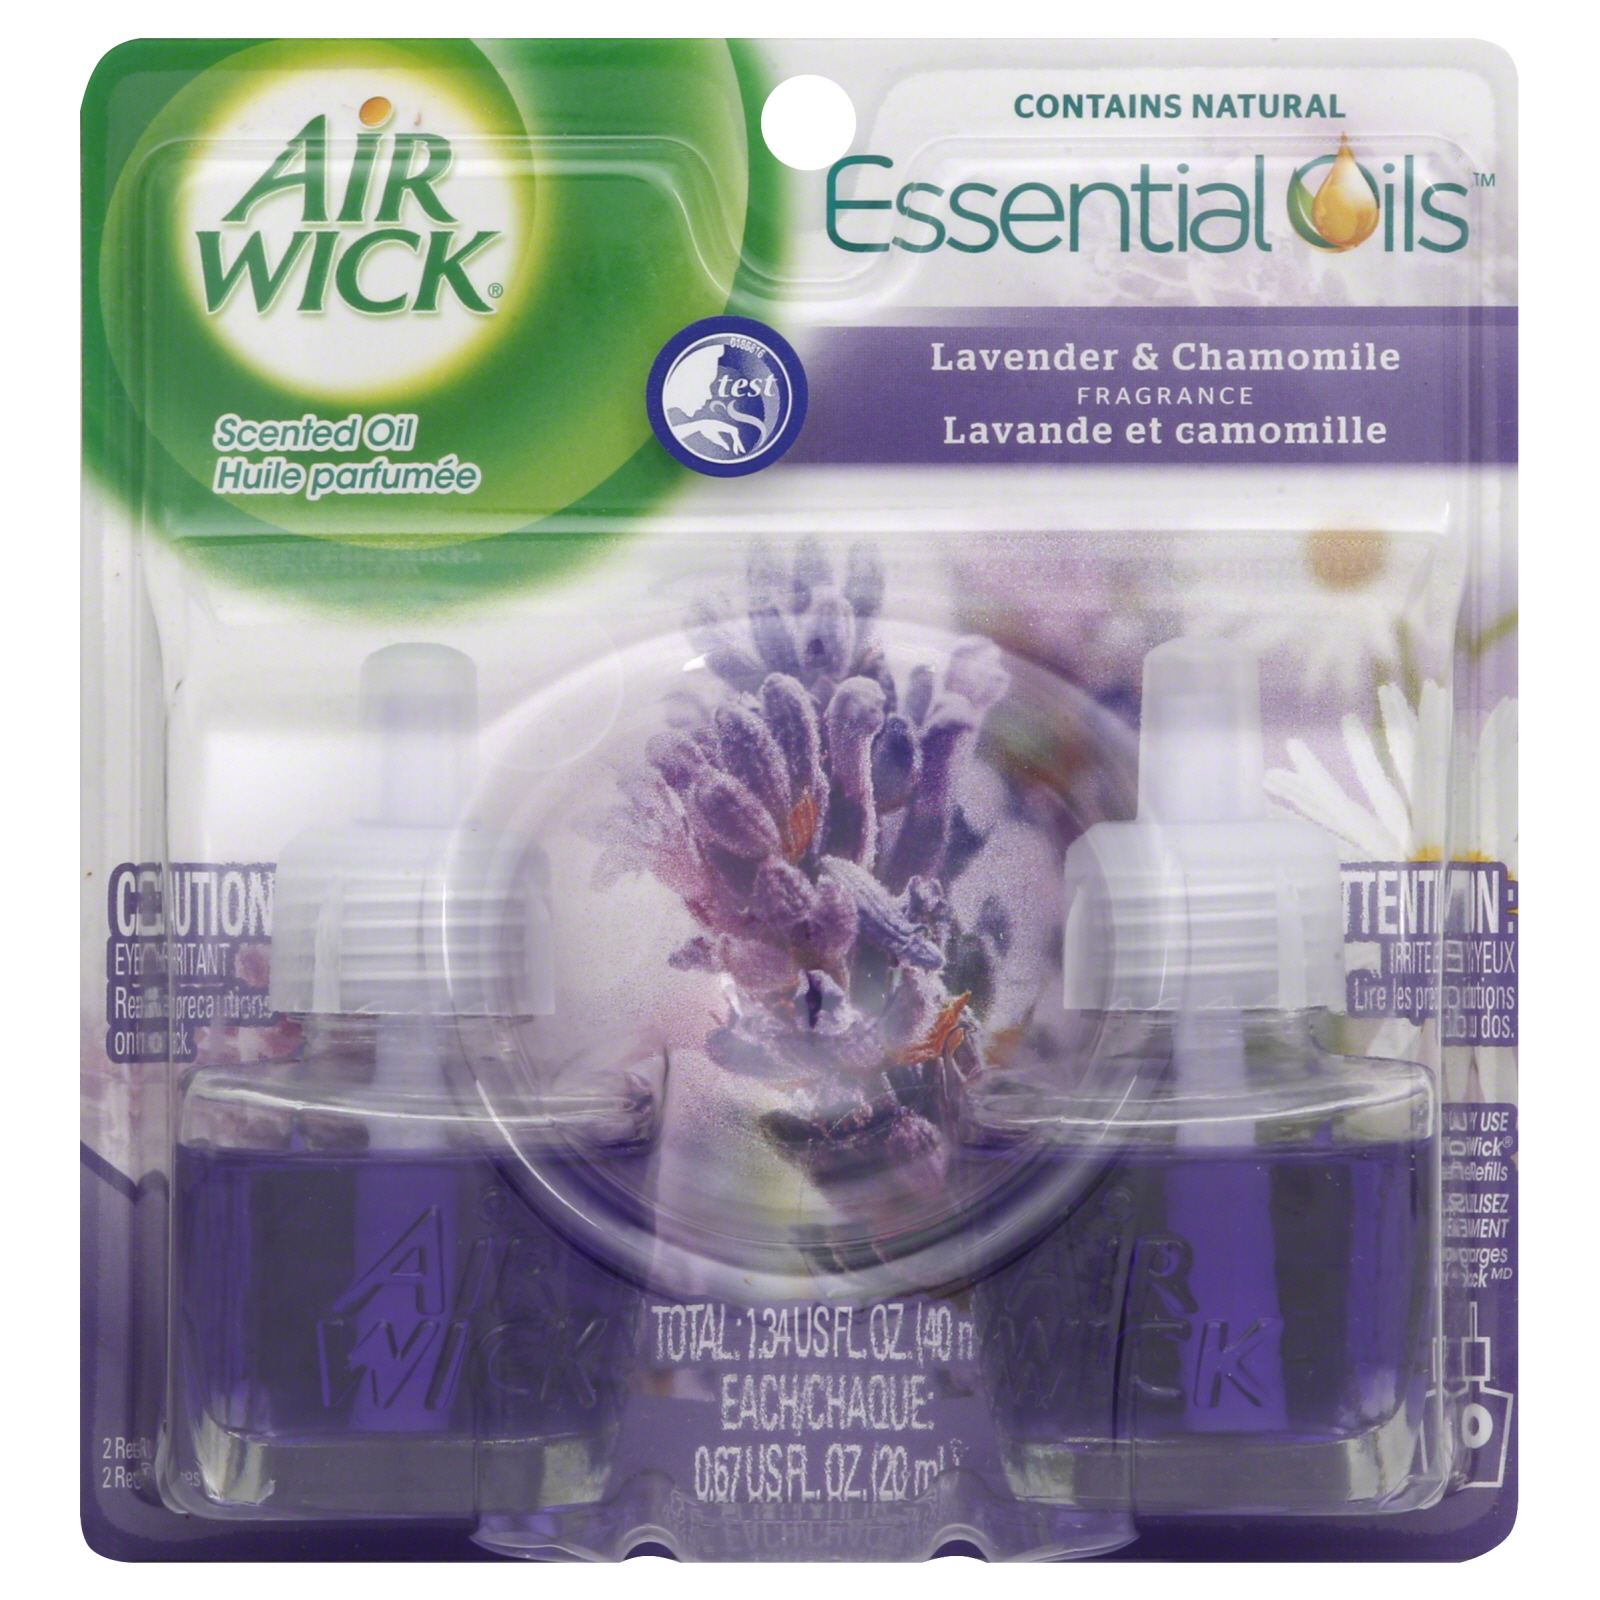 Airwick Oil Refills, Lavender & Chamomile Scented, Value Pack, 2 -0.71 fl oz (21 ml) refills [1.42 fl oz (42 ml)]